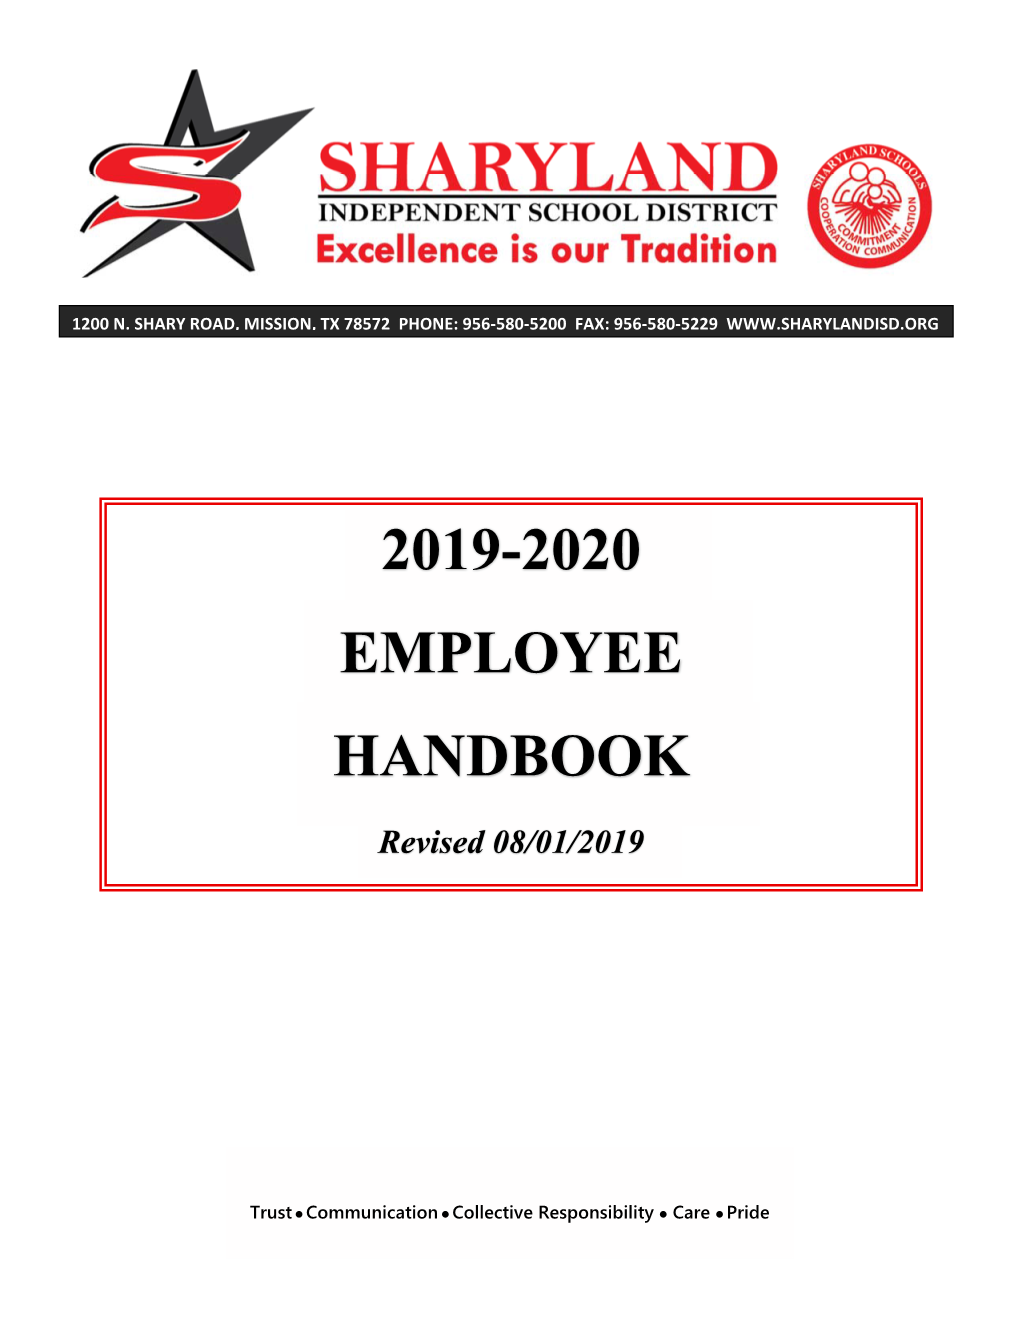 2019-2020 Employee Handbook